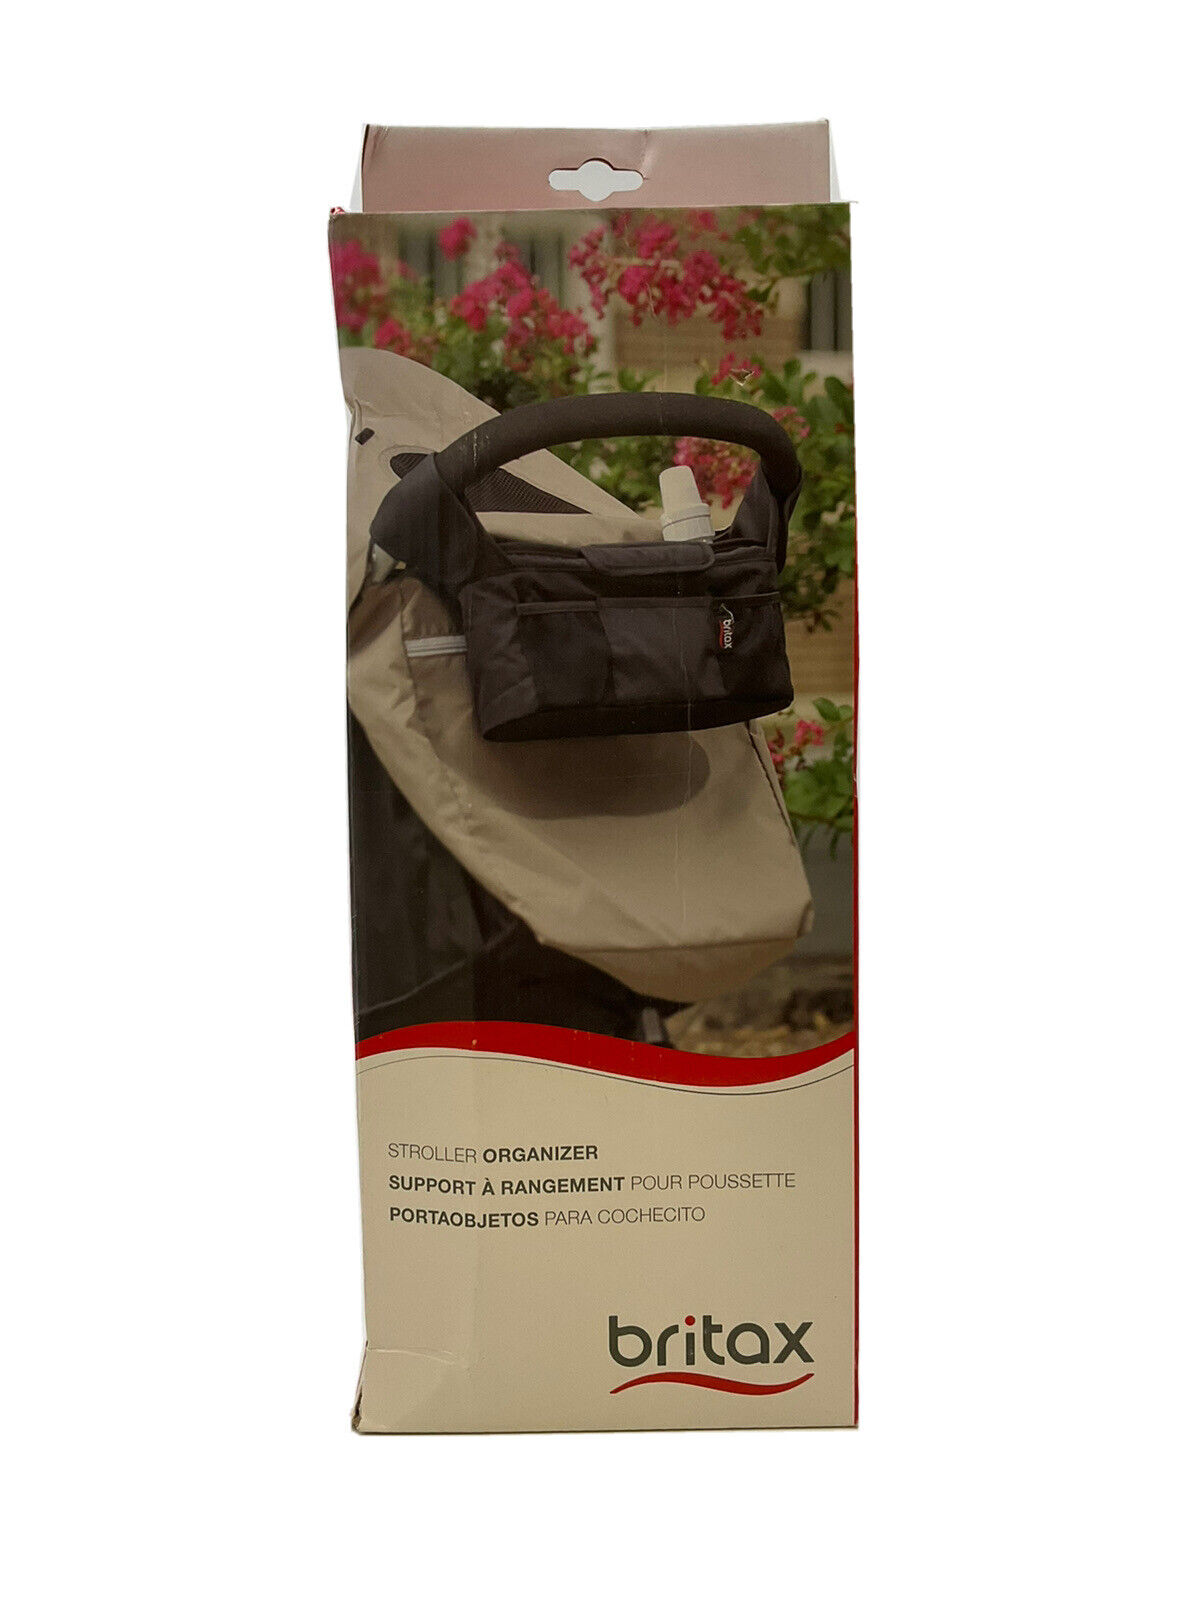 Britax Black Stroller Organizer Bag. Collapsible